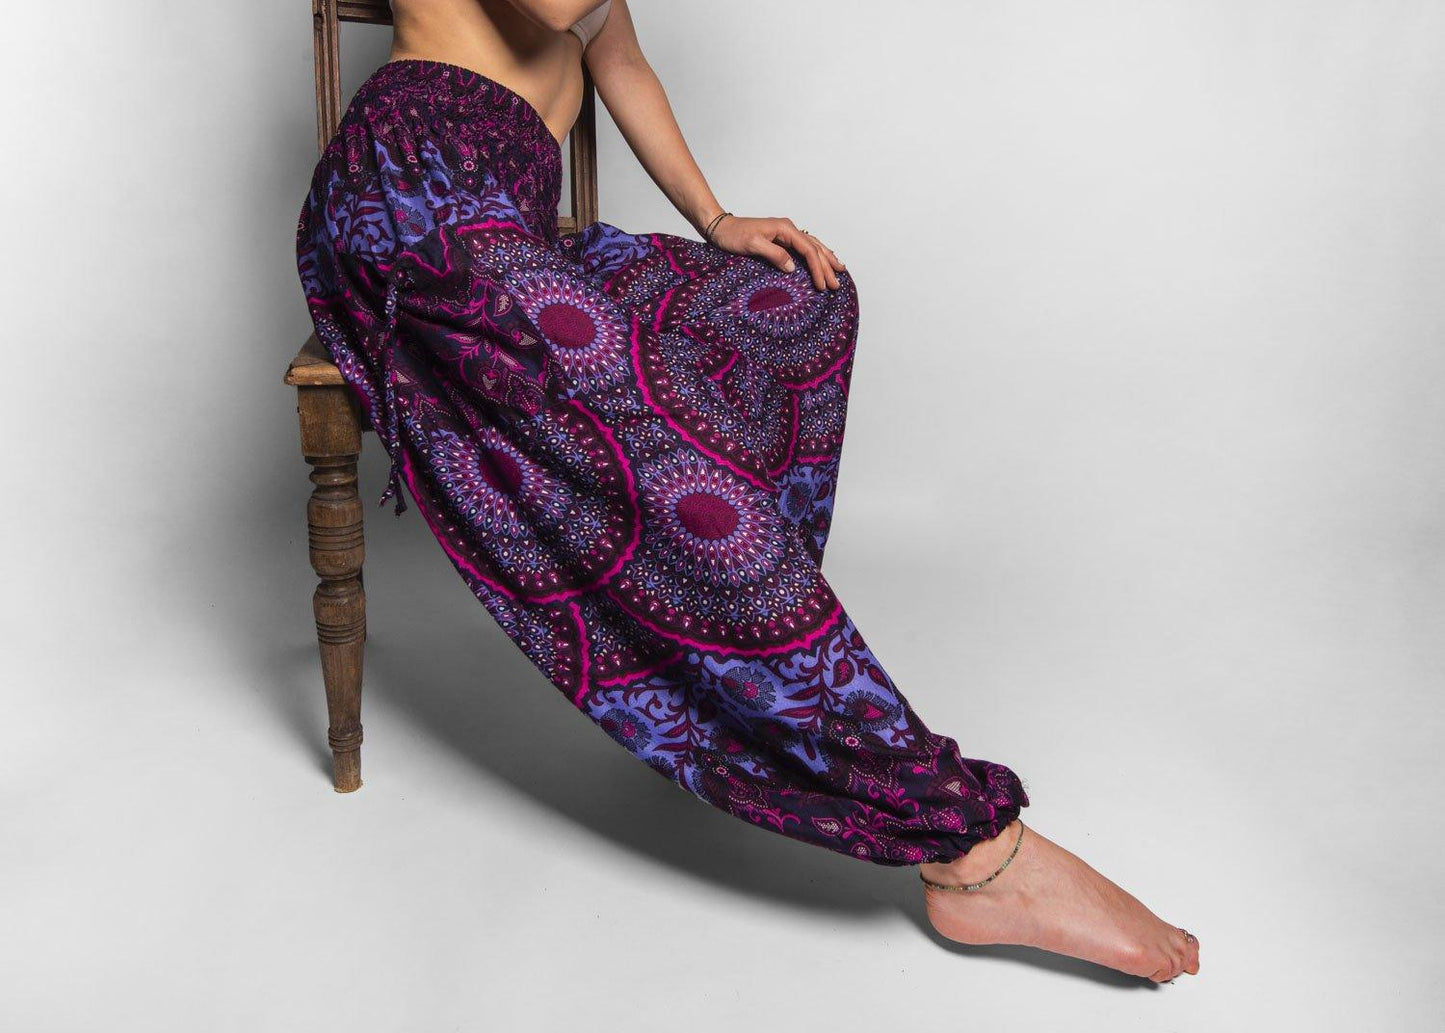 PLUS SIZE harem pants with mandala pattern in pink purple